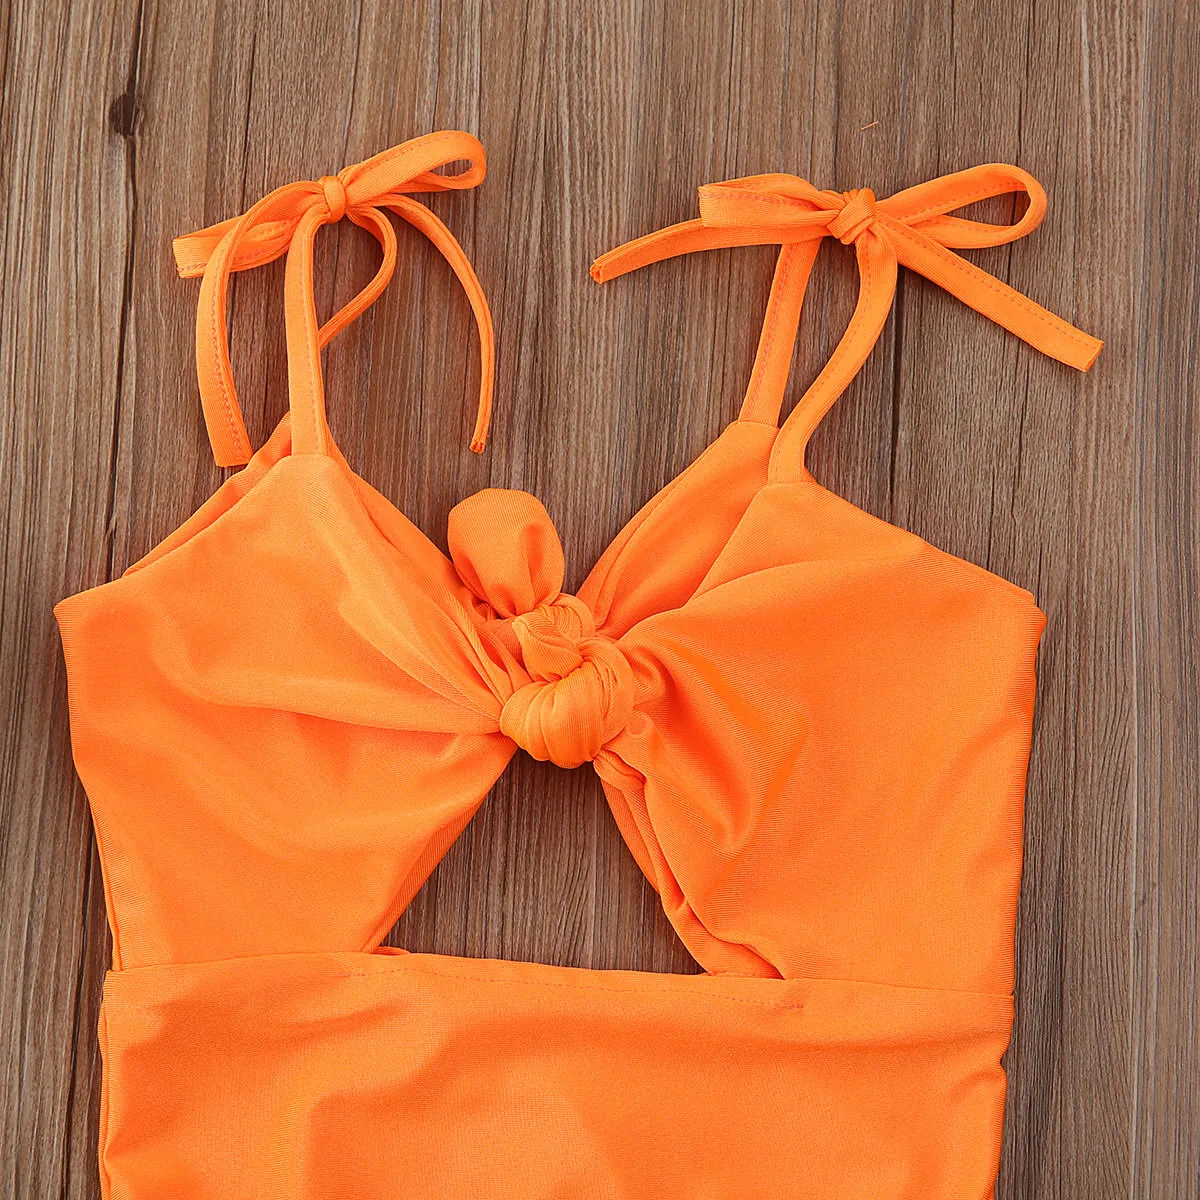 1-5Y Infant Kid Baby Girl Swimwear Bowknot Belt Swimsuit Bikini Bathing Suit Swimming Beachwear Baby Bodysuits comfotable